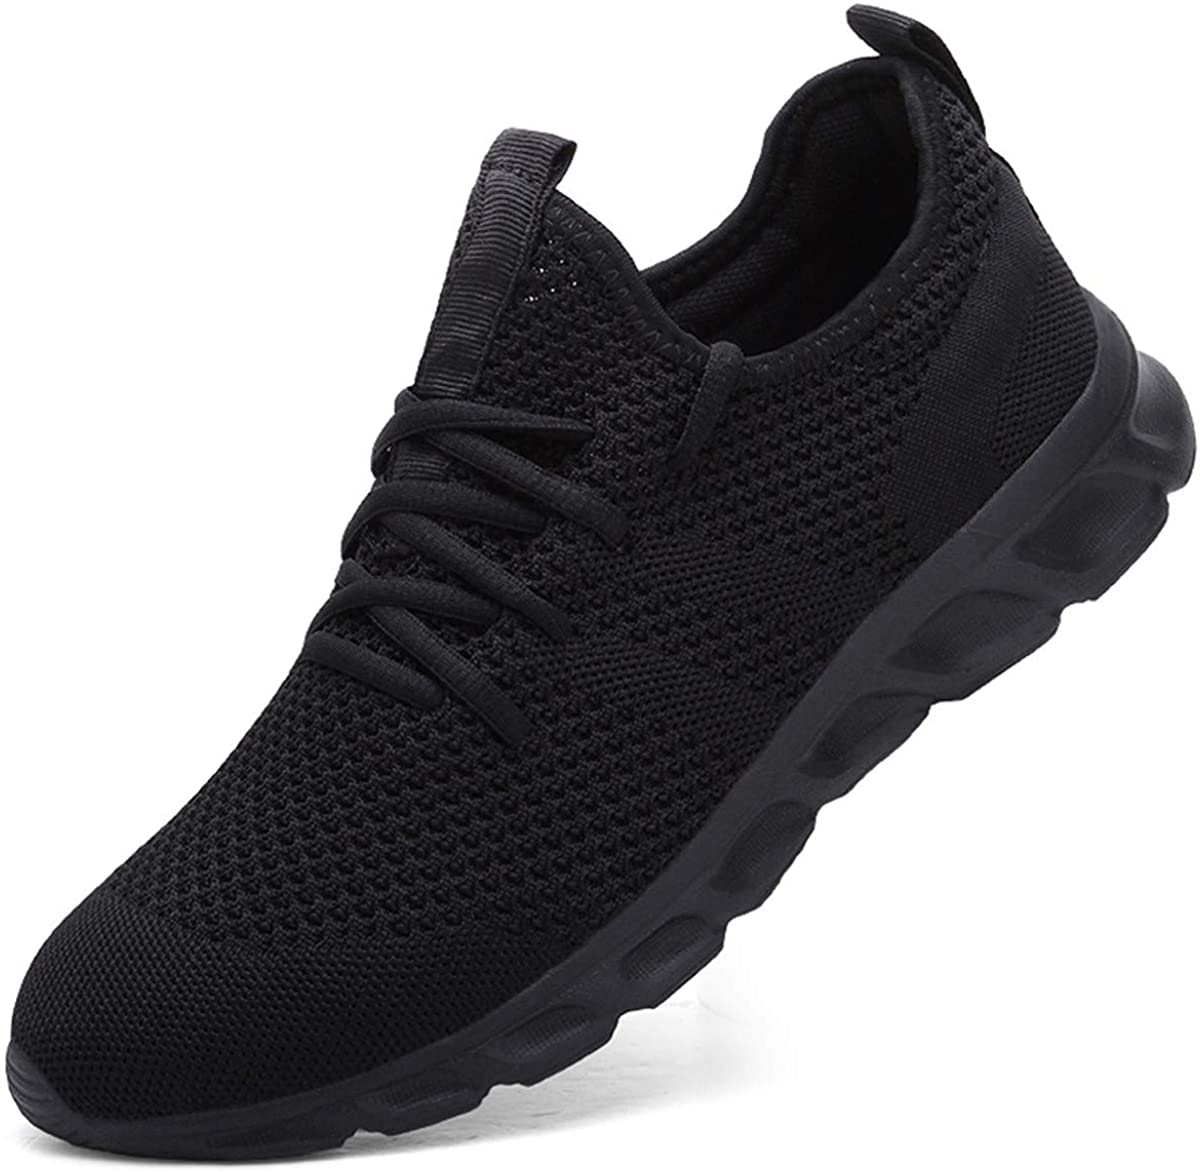 Nike Flexmethod TR Men's Training Black sneakers 11 Flexible Gym Shoes | Gym  shoes, Black sneakers, Mens training shoes